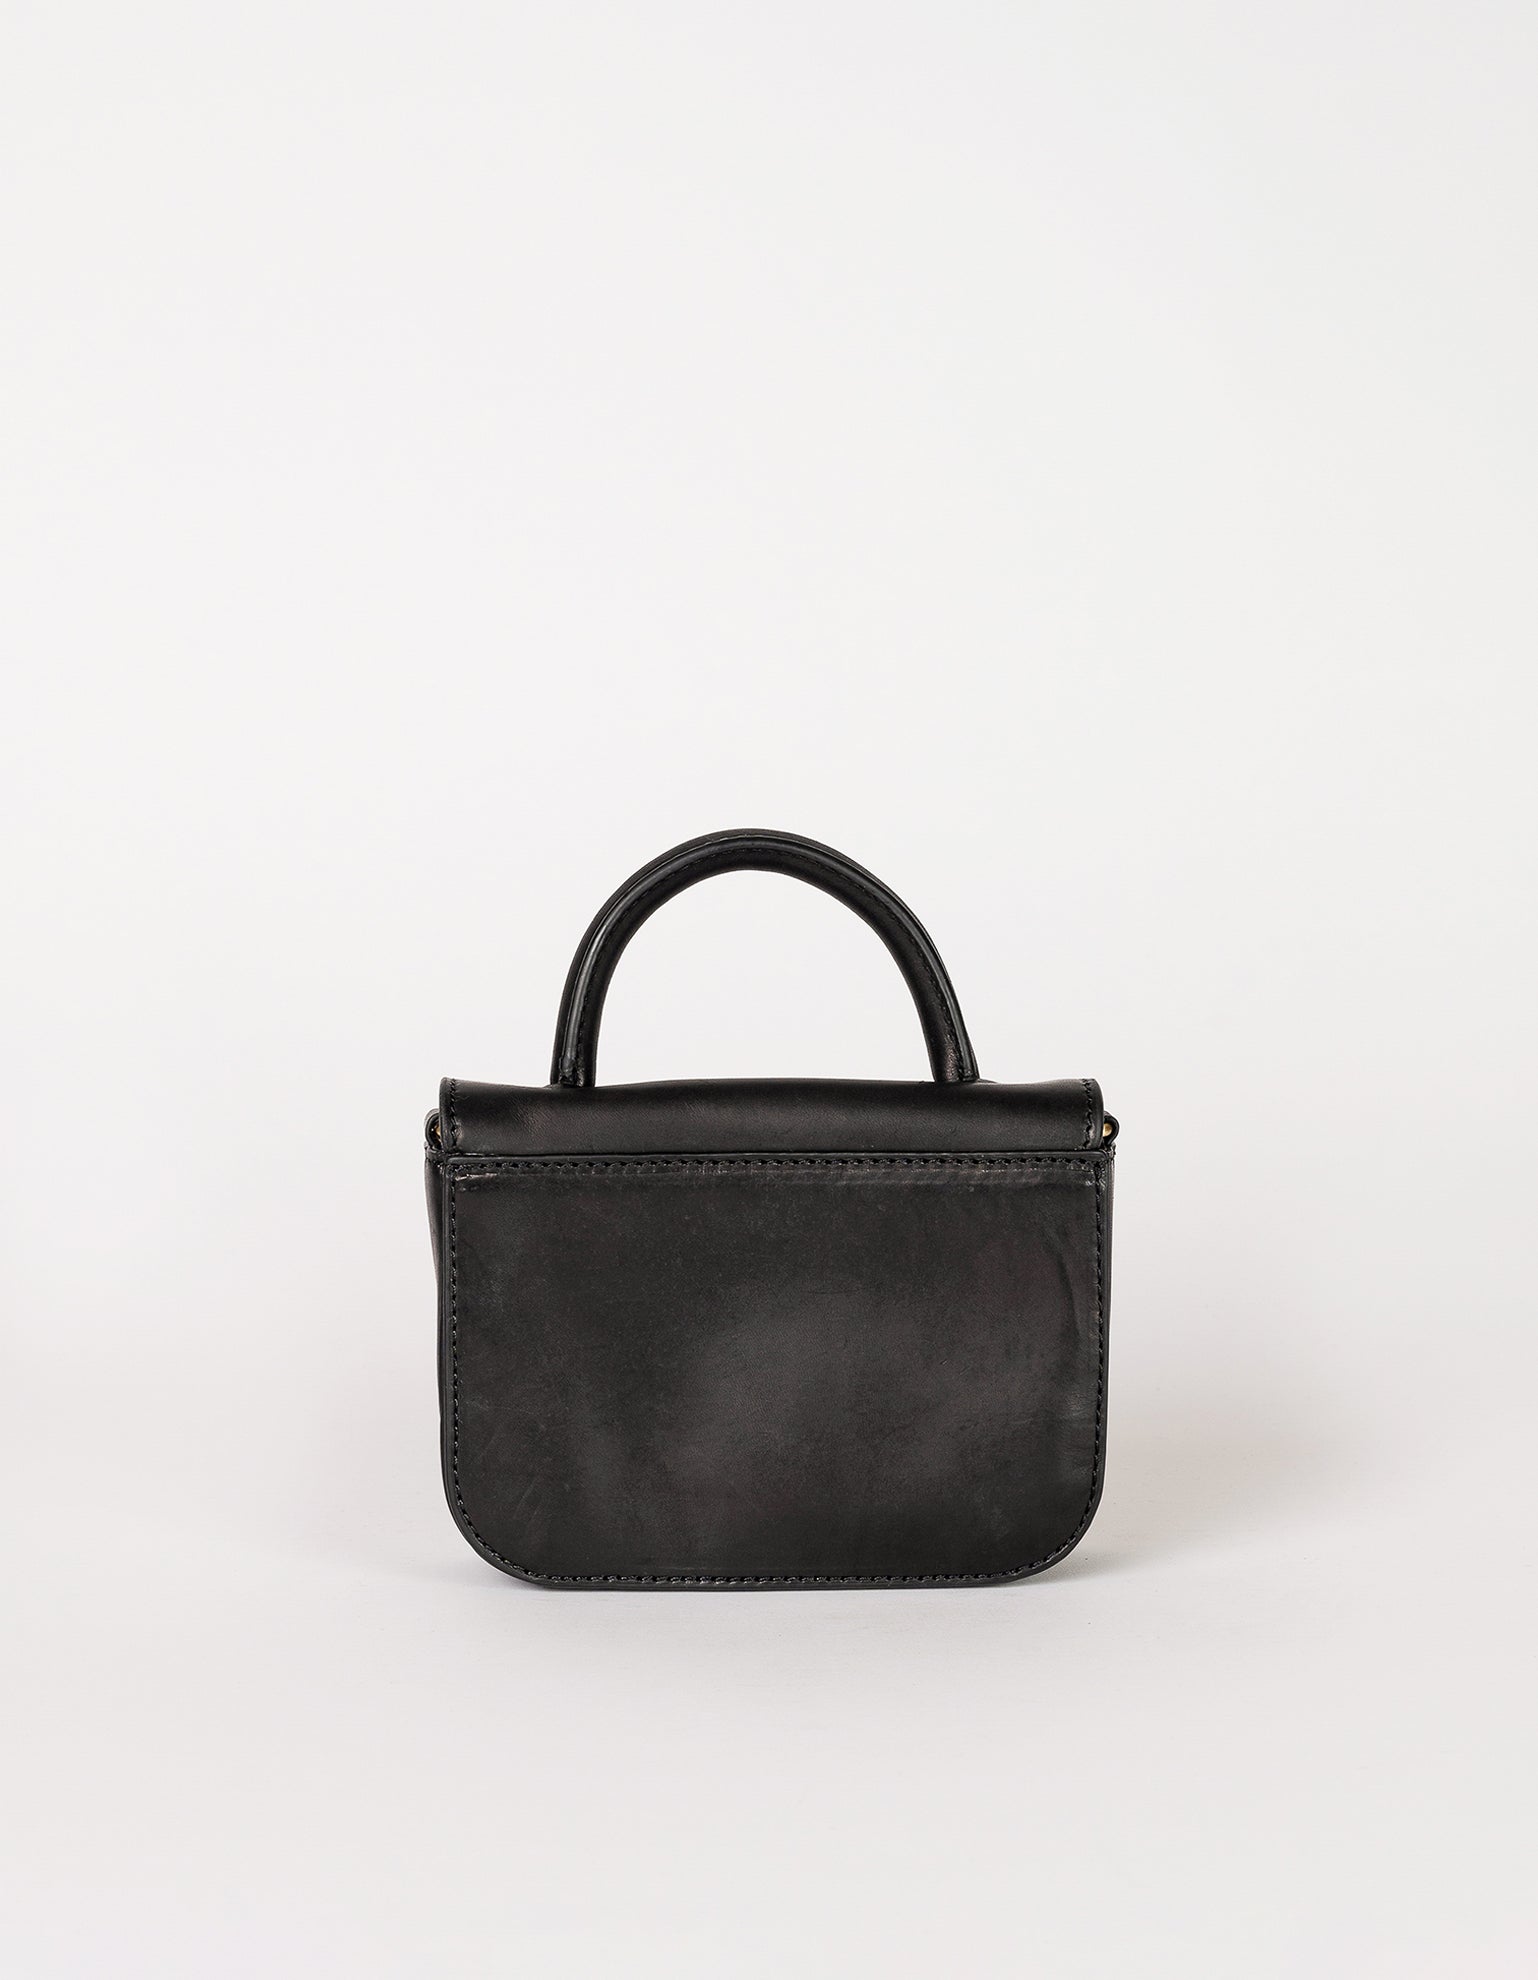 Nano Bag Black Classic Leather Back Product Image.